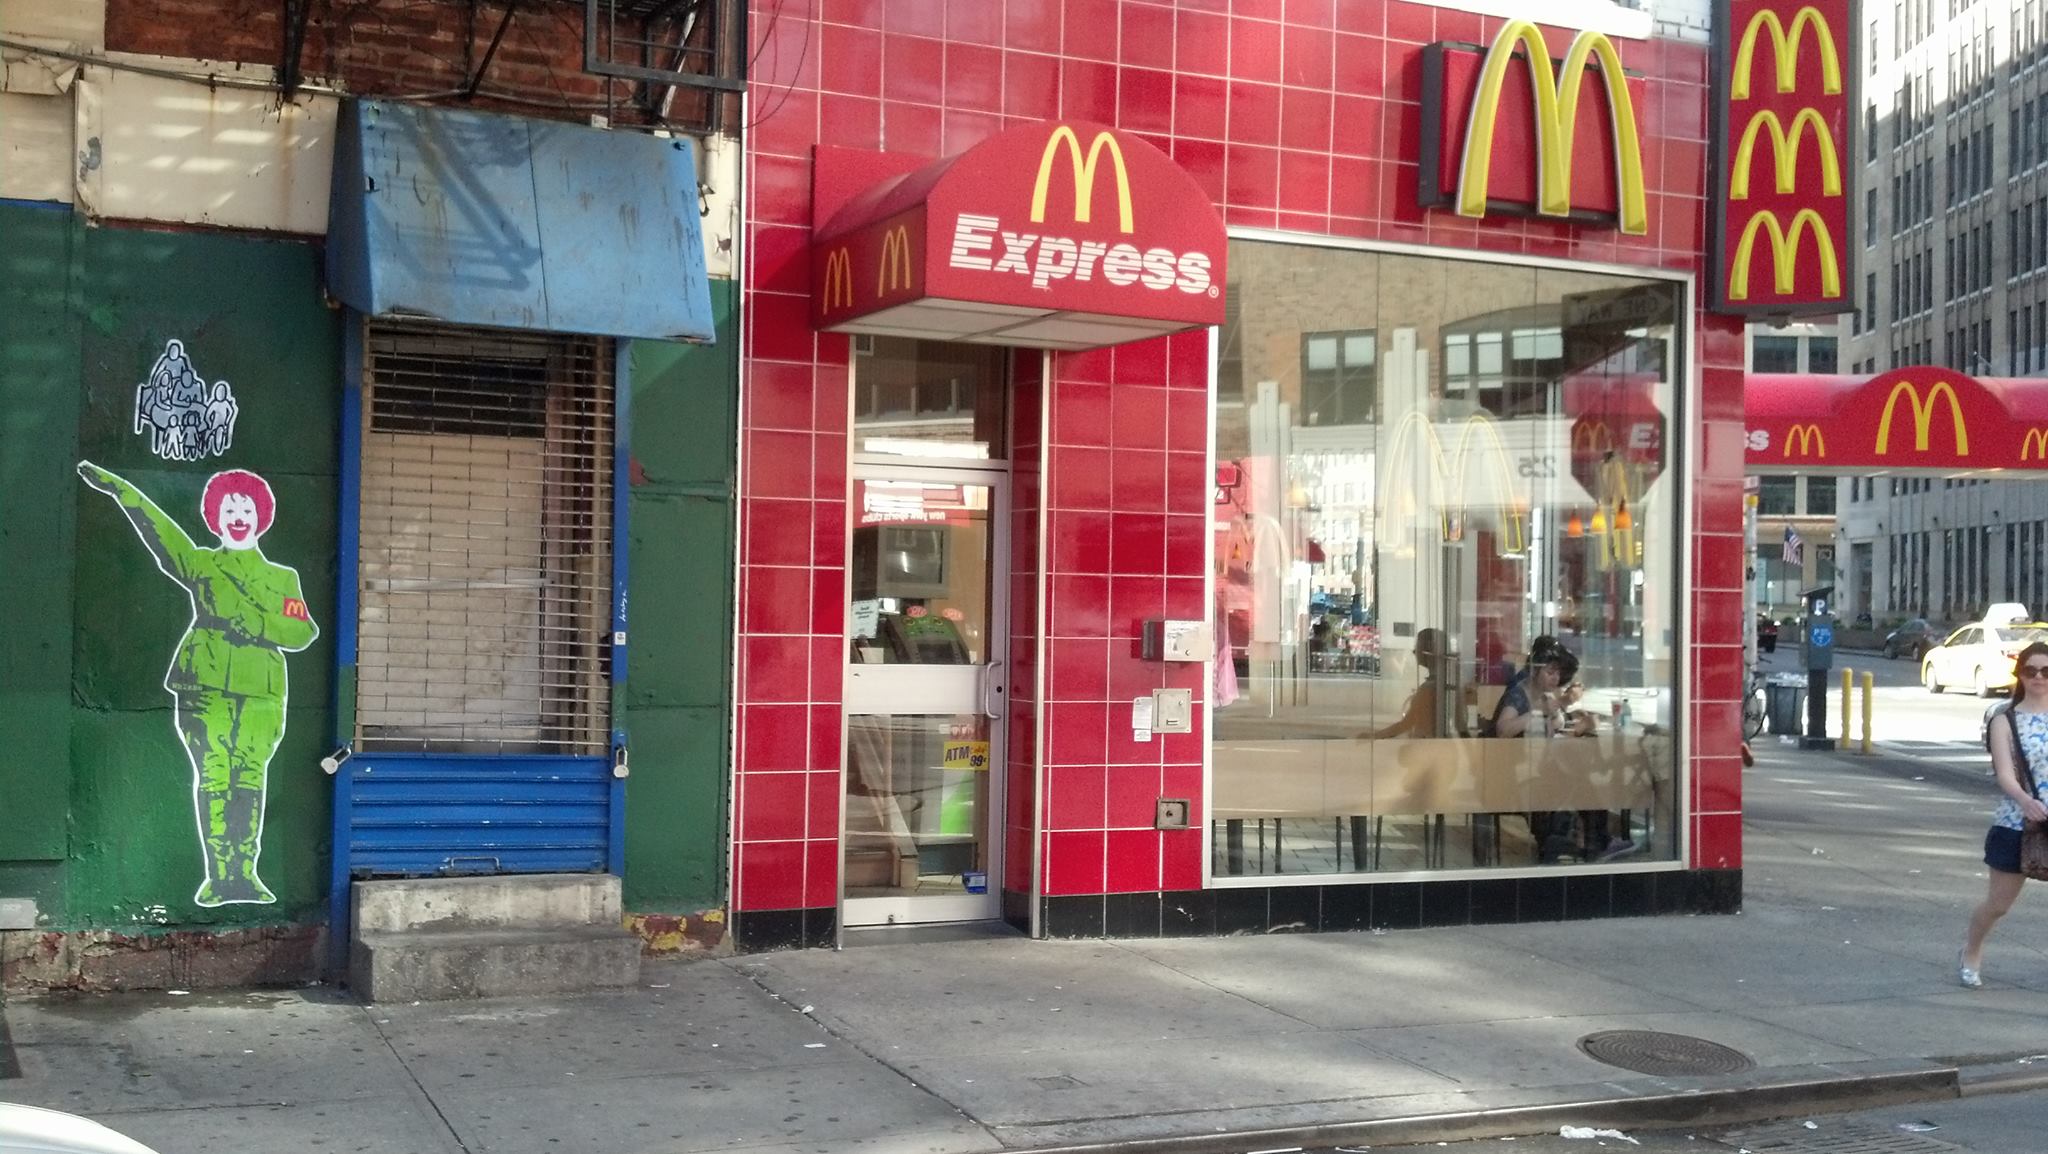 McDonalds Installation [West Village, NYC]